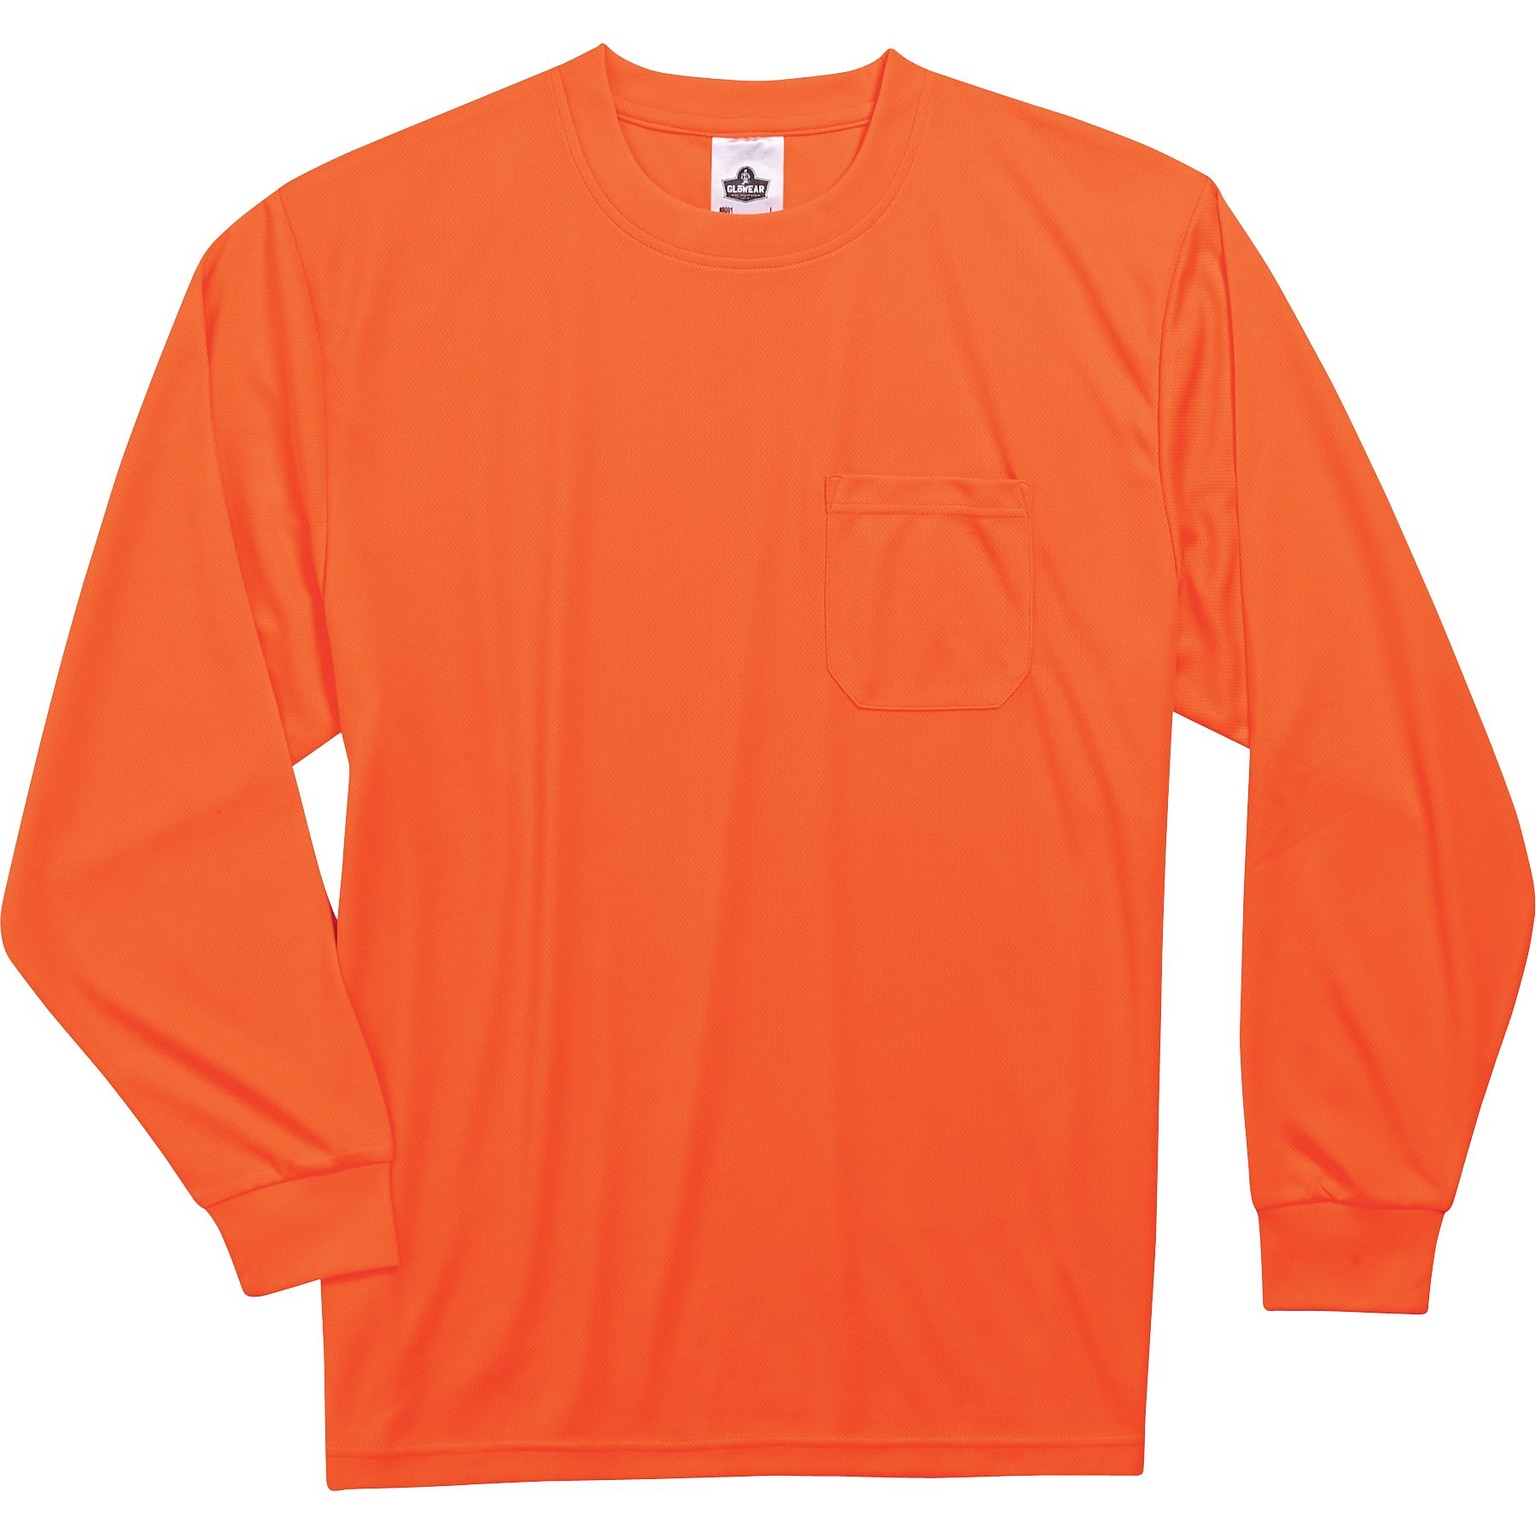 Ergodyne GloWear 8091 High Visibility Long Sleeve T-Shirt, Orange, 4XL (21598)